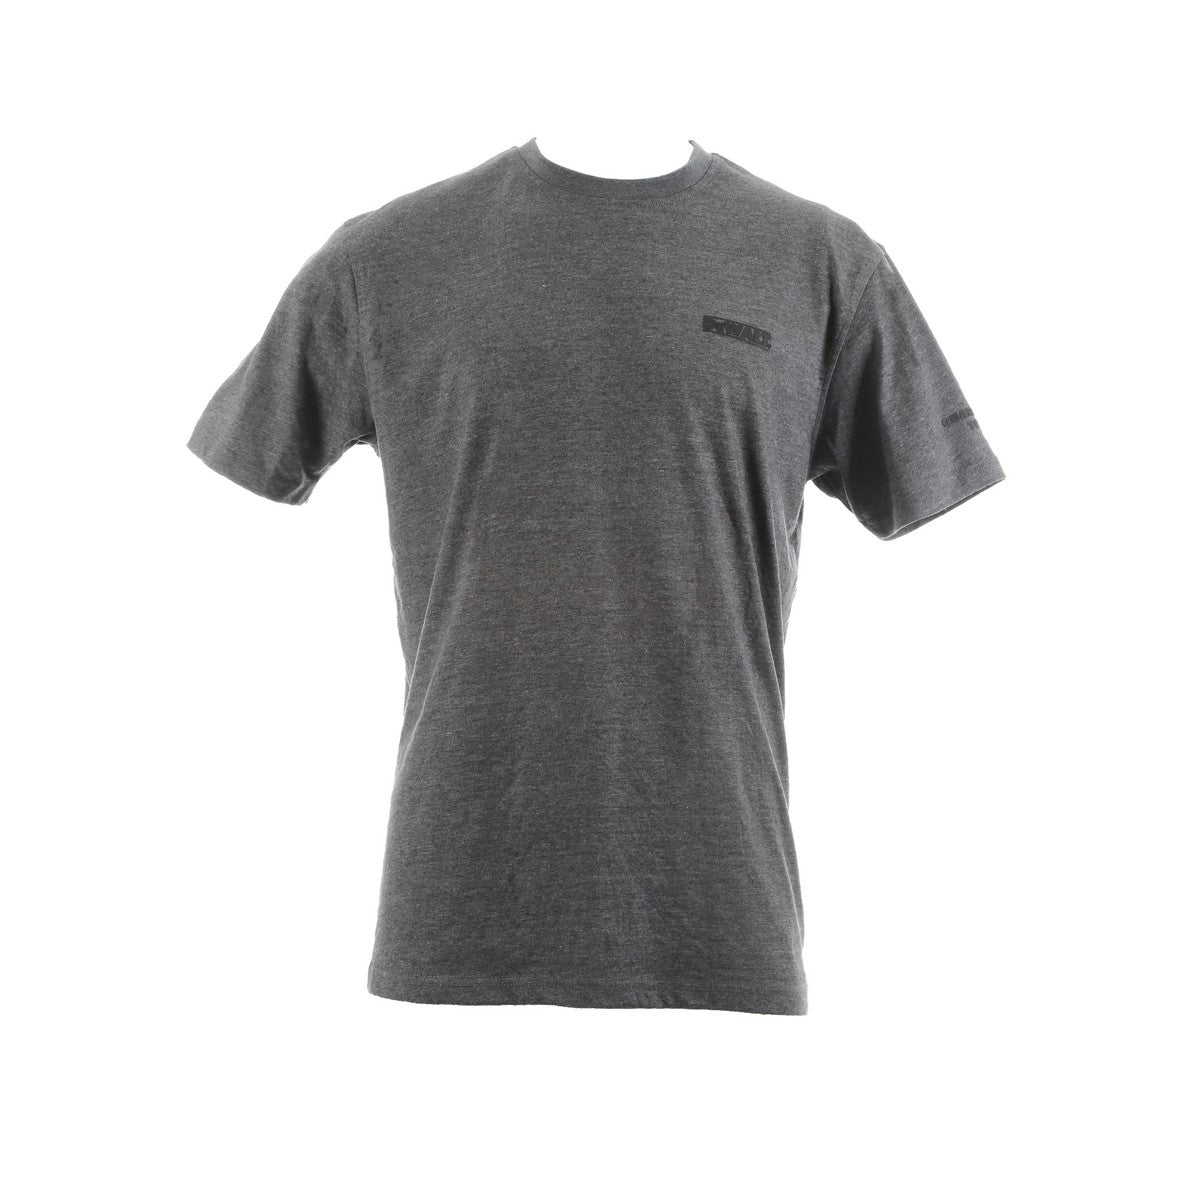 DeWalt Charcoal Grey T-Shirt